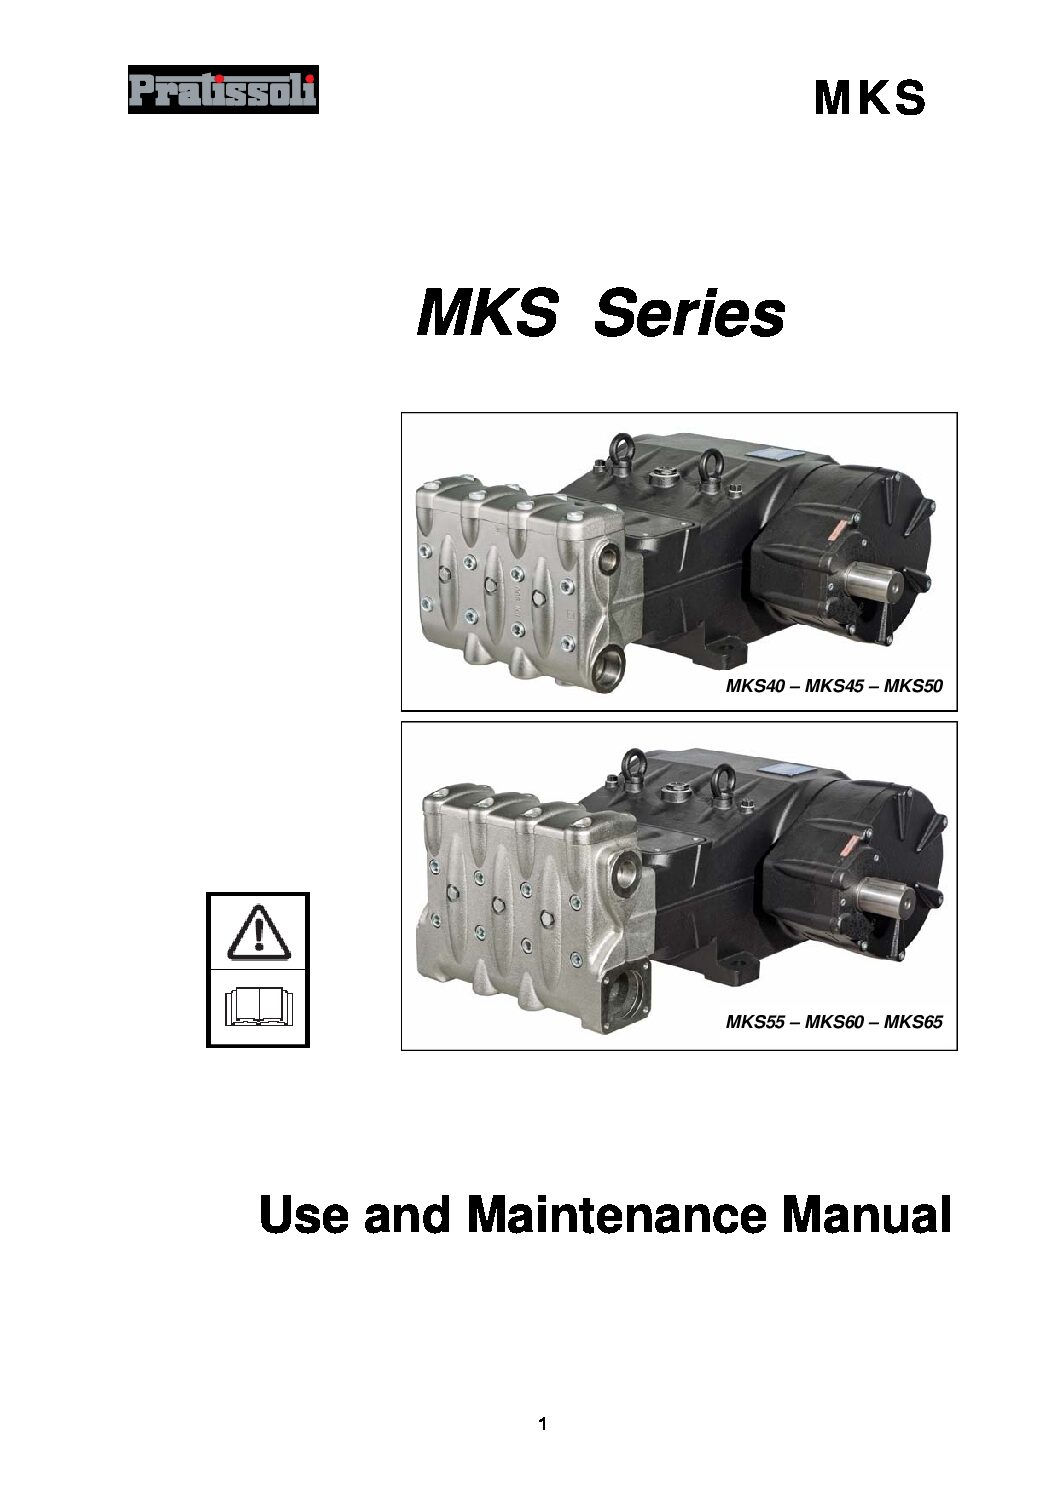 Pratissoli MKS Series Plunger Pumps Manual